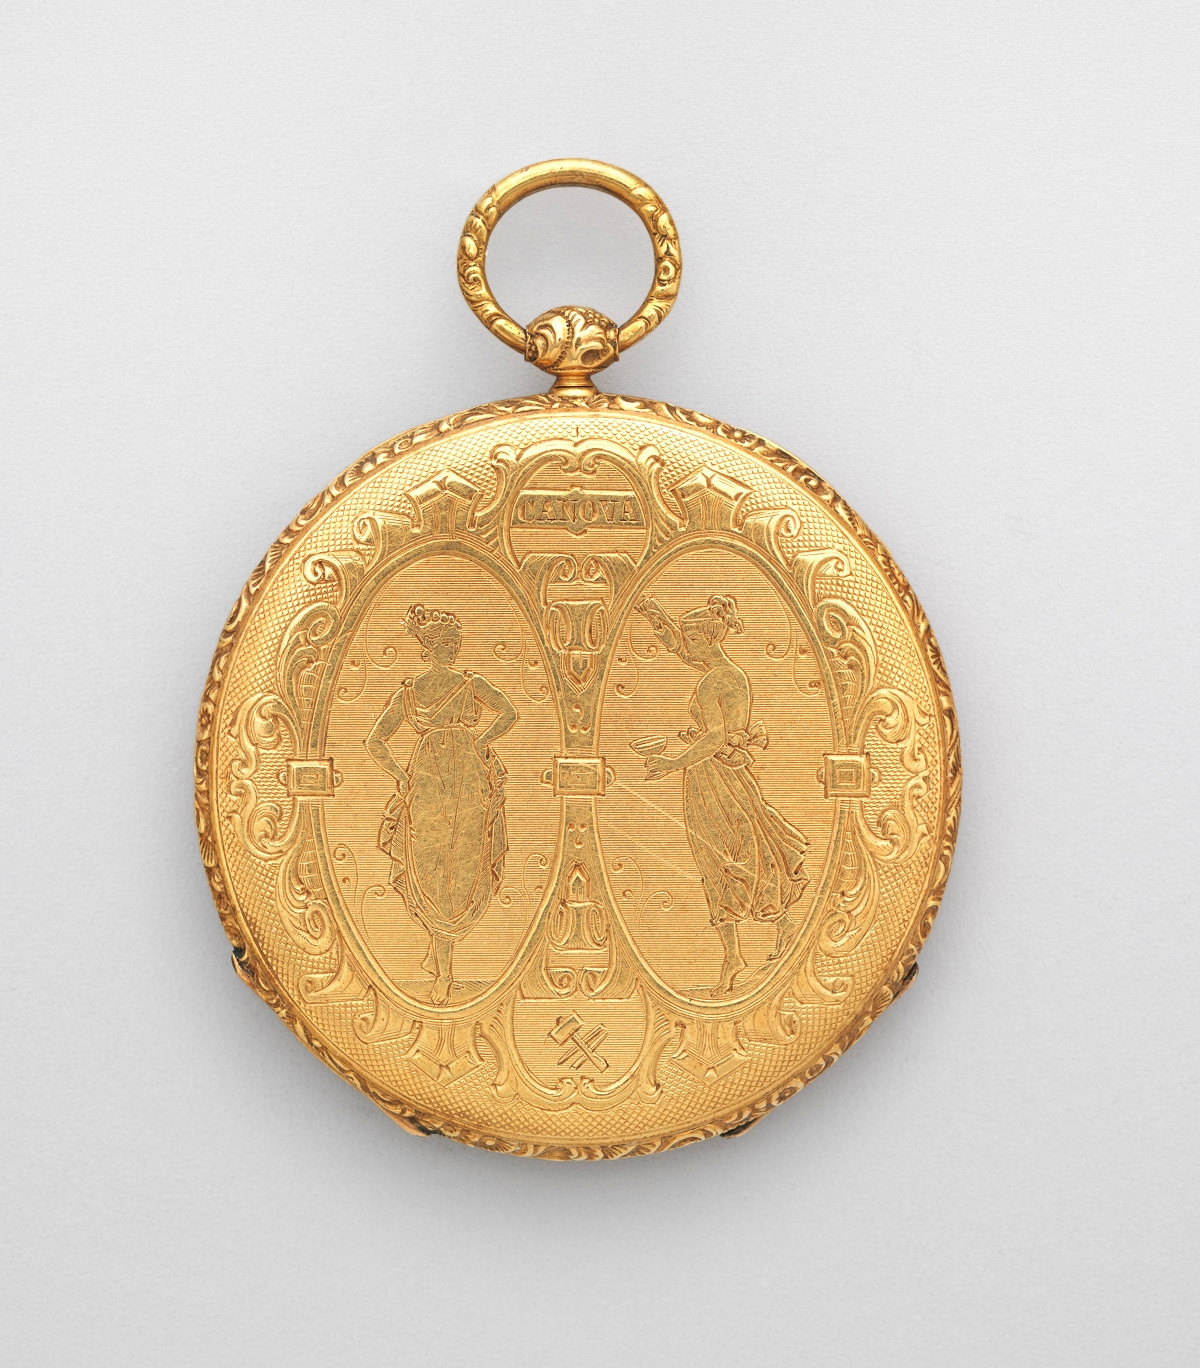 1830. Watch. Swiss, Geneva. Gold, enamel. metmuseum